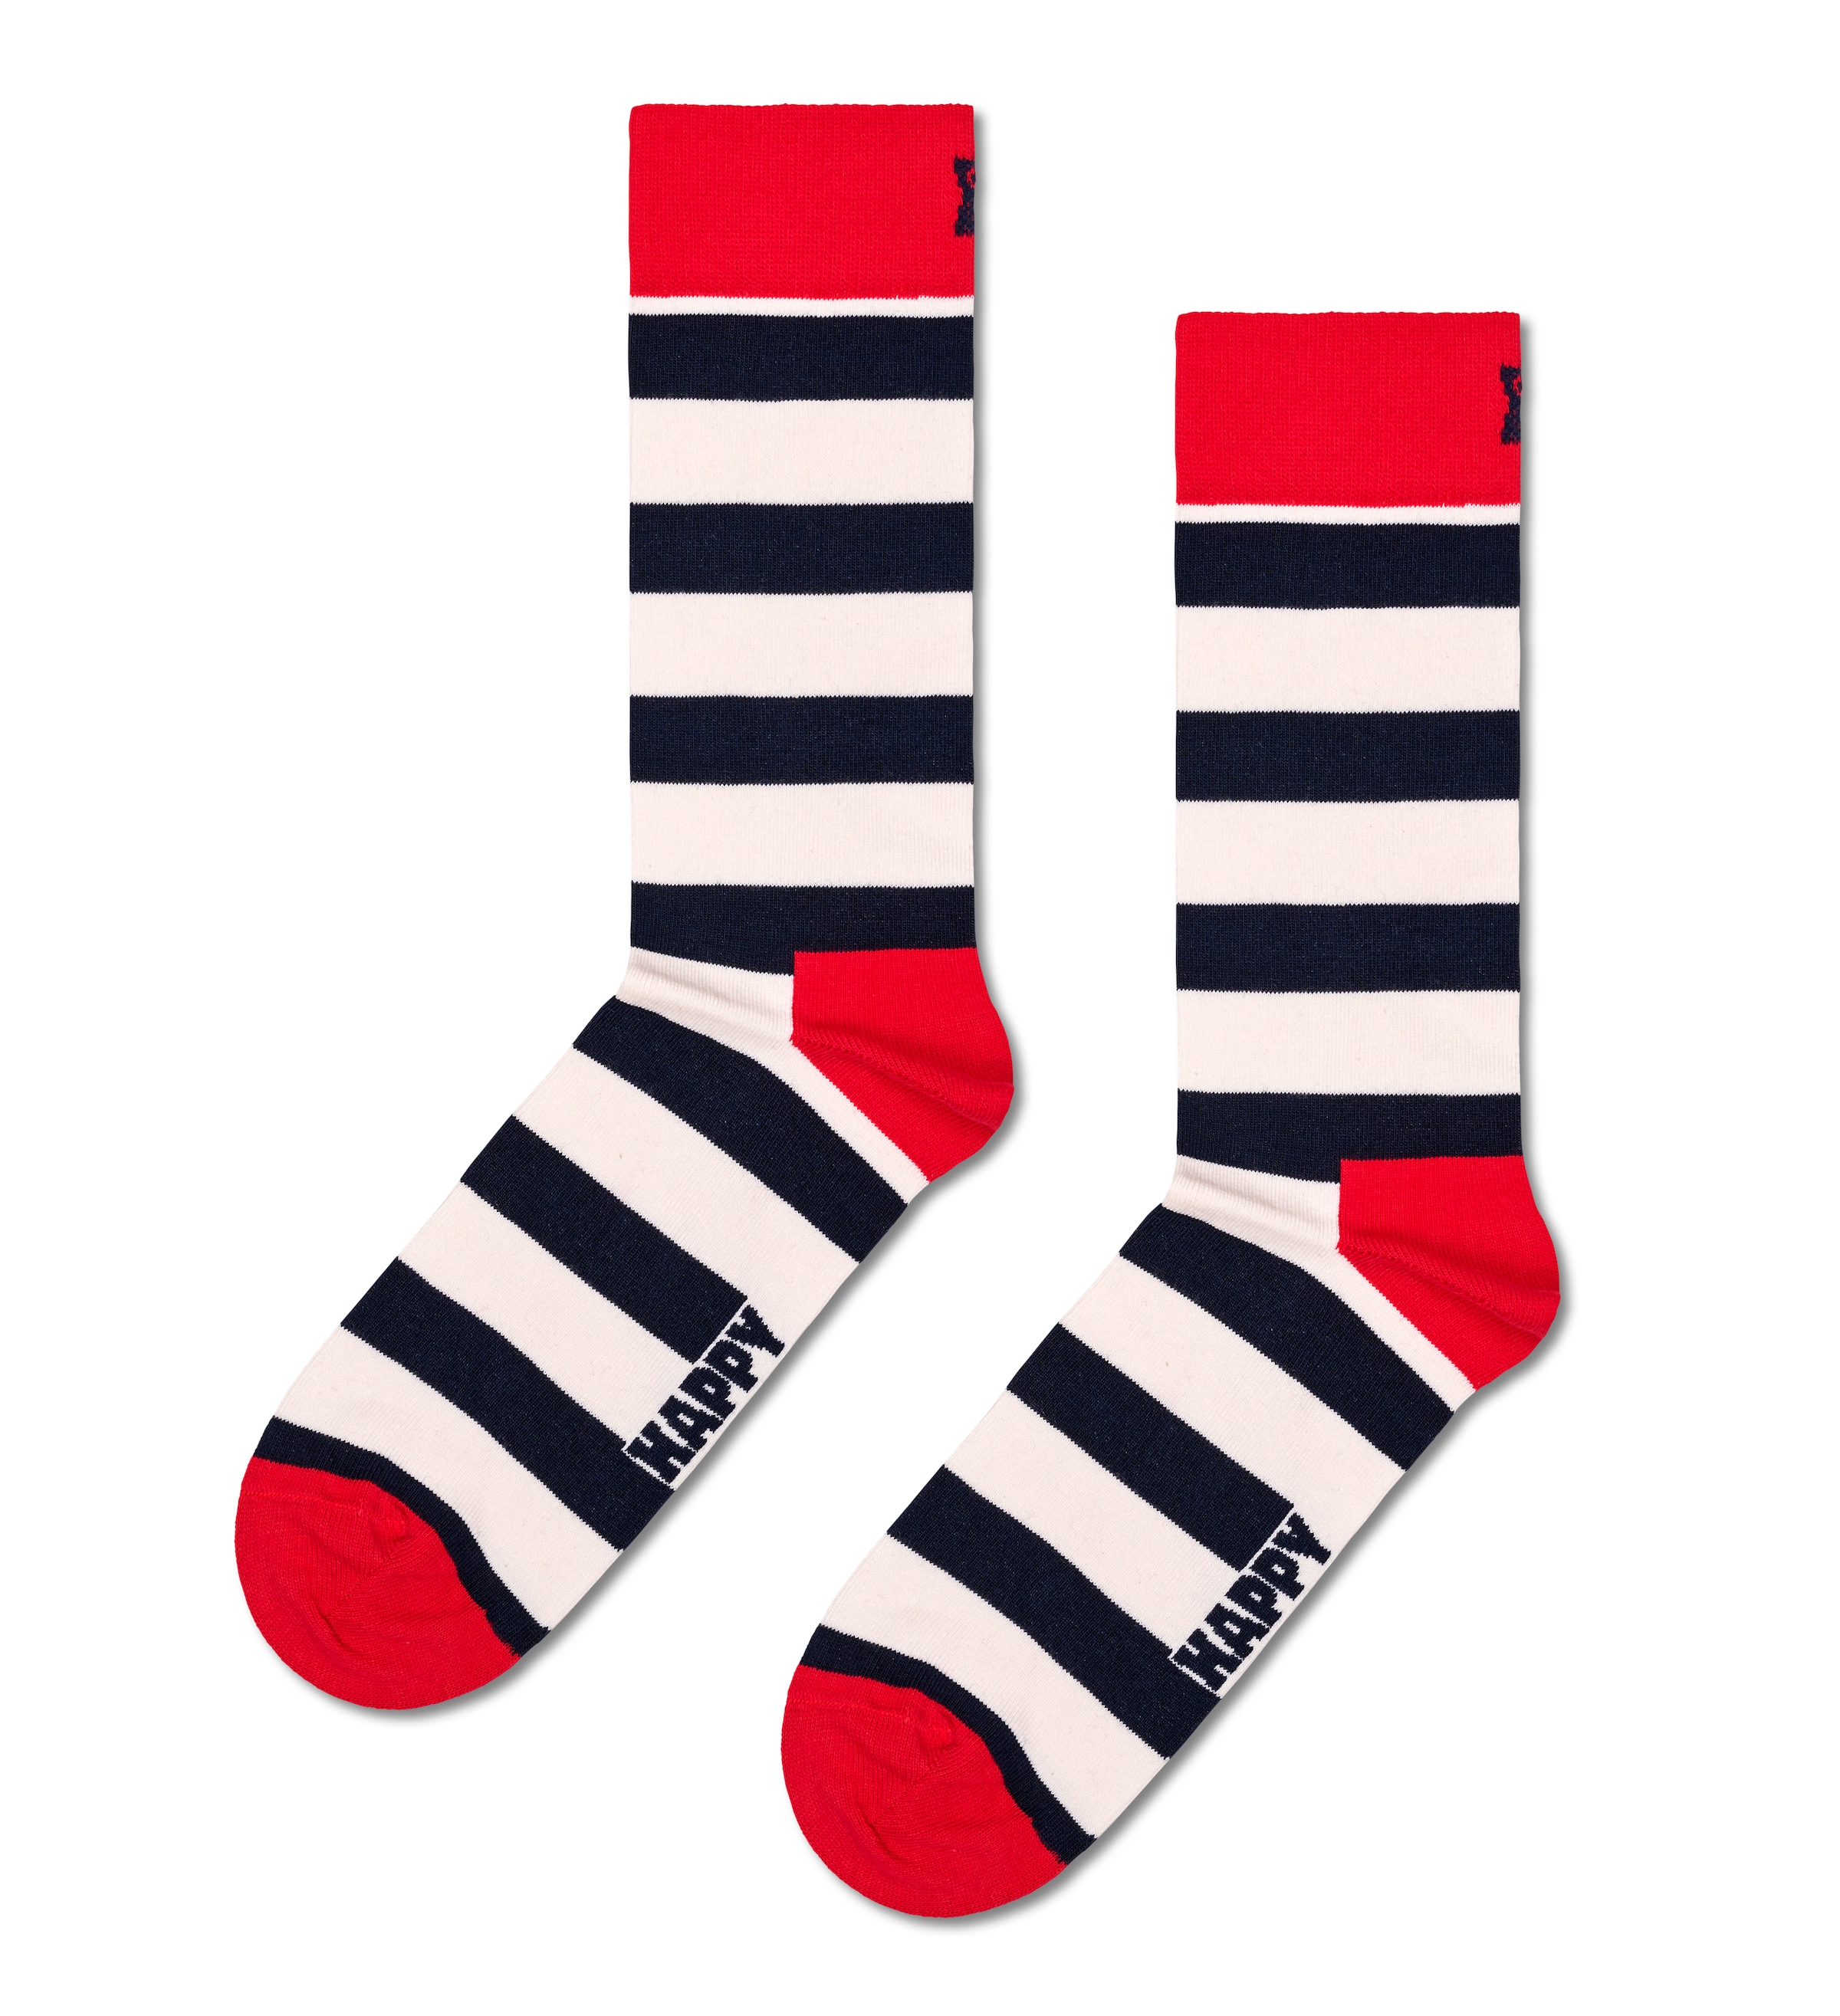 Stripes (Packung, »2-Pack Socken | 2 Classic kaufen & Big Dot Paar), Happy Dots Socks«, Socks BAUR